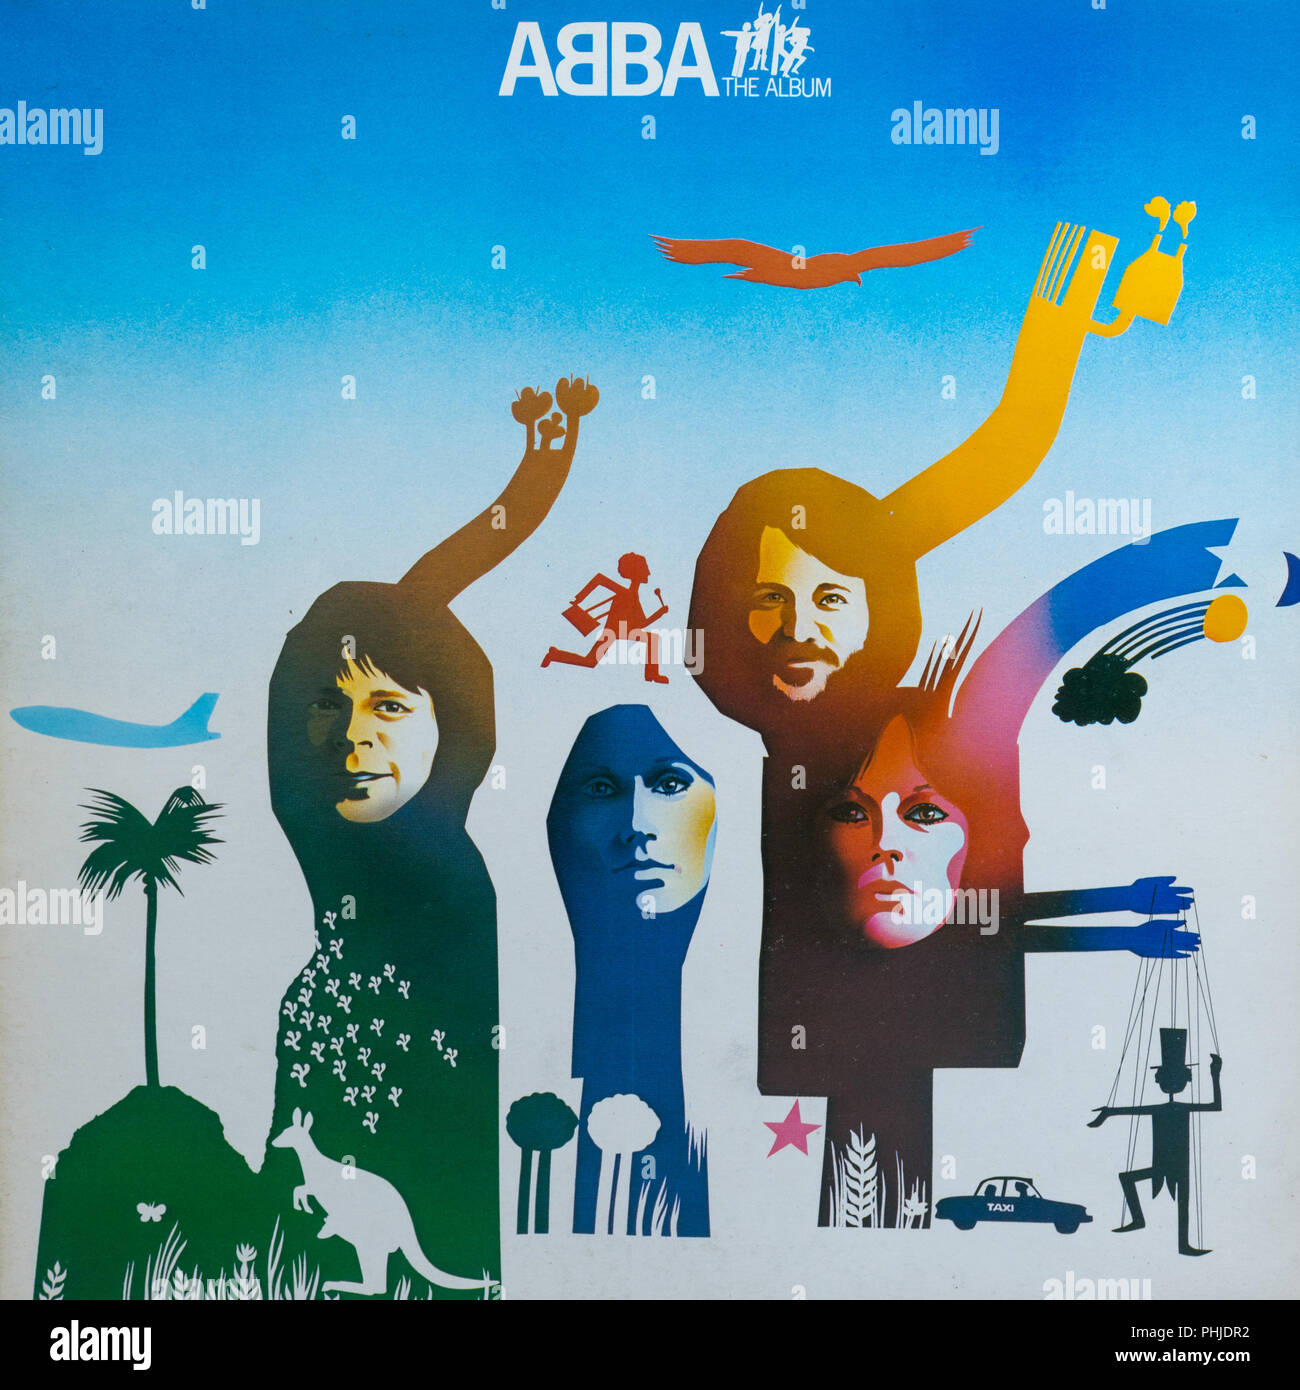 Abba - The Album - album cover Stock Photo